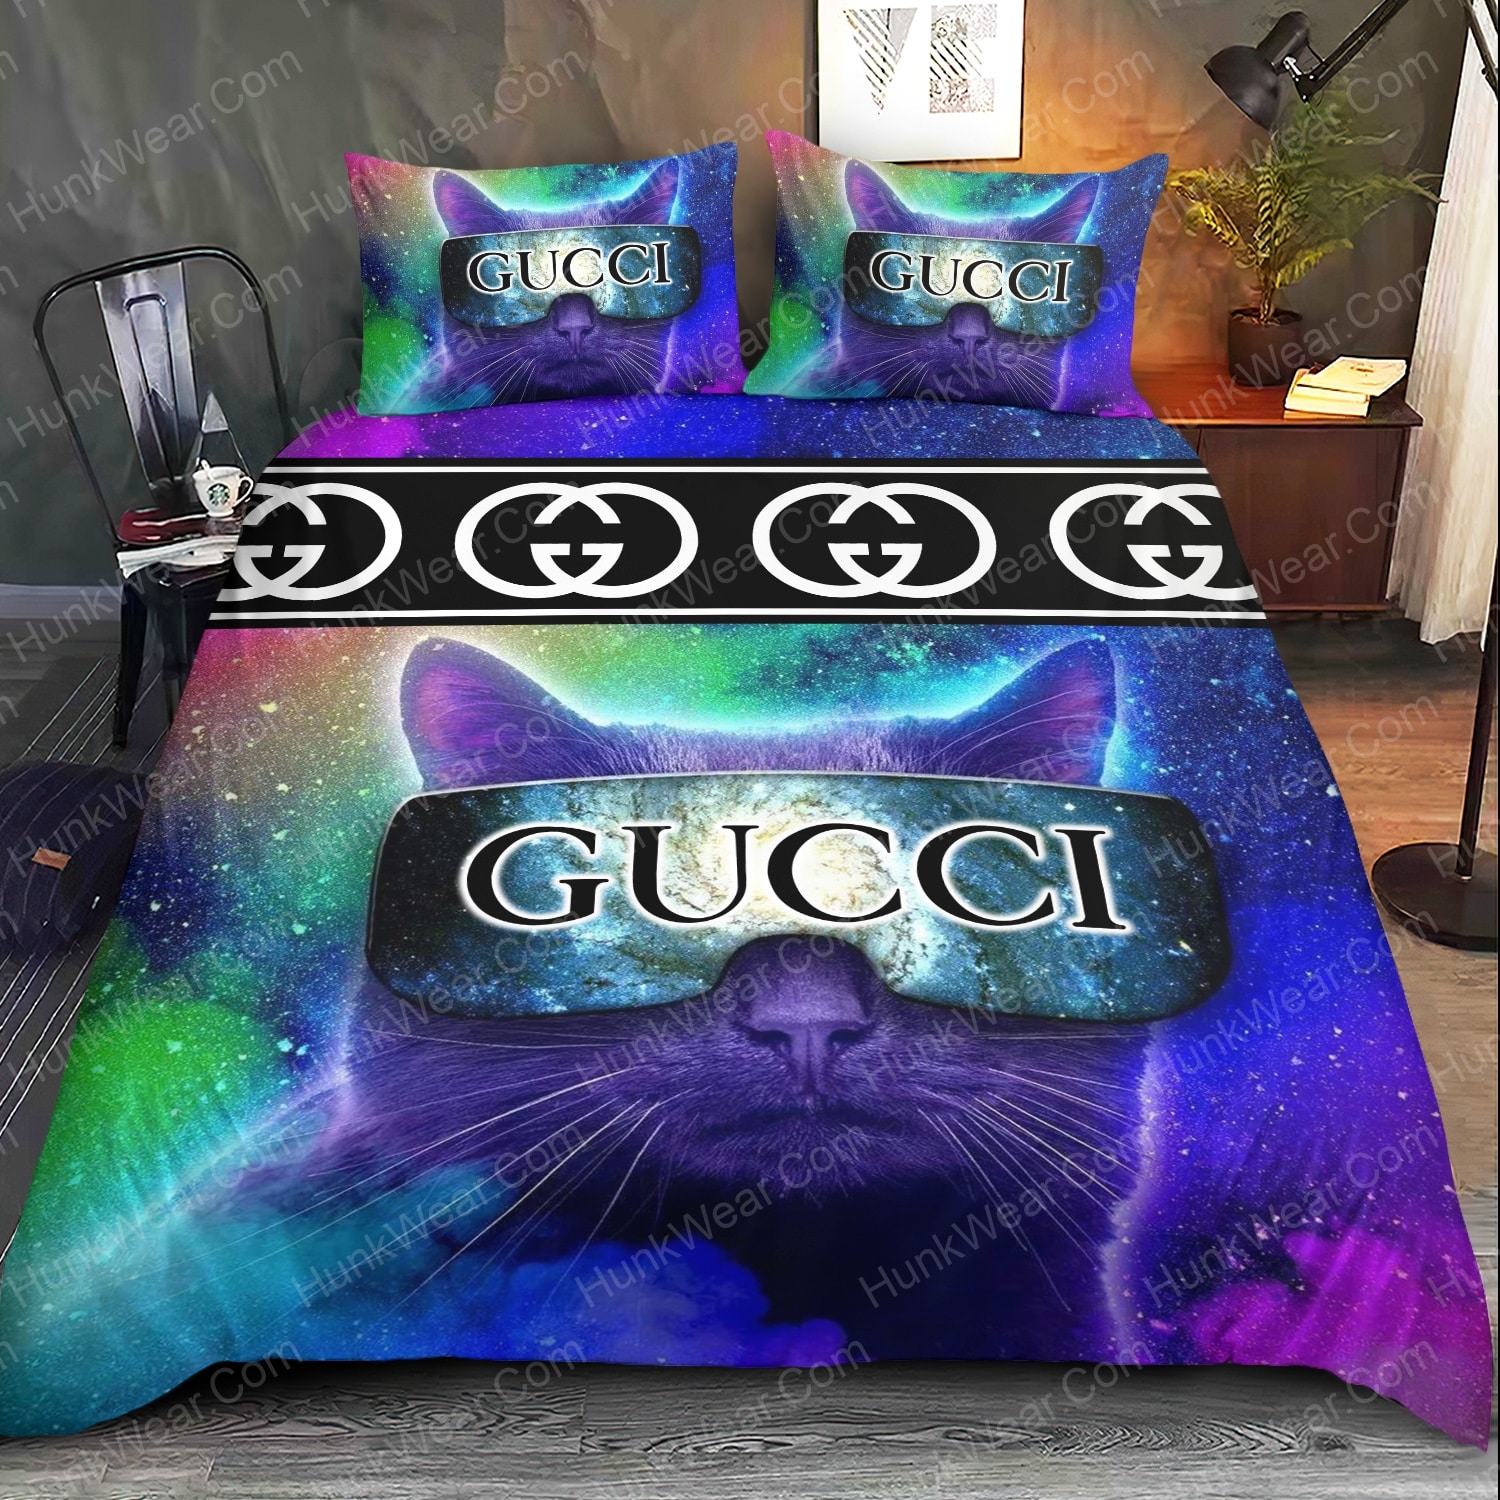 gucci cute cat wearing glasses bed set bedding set